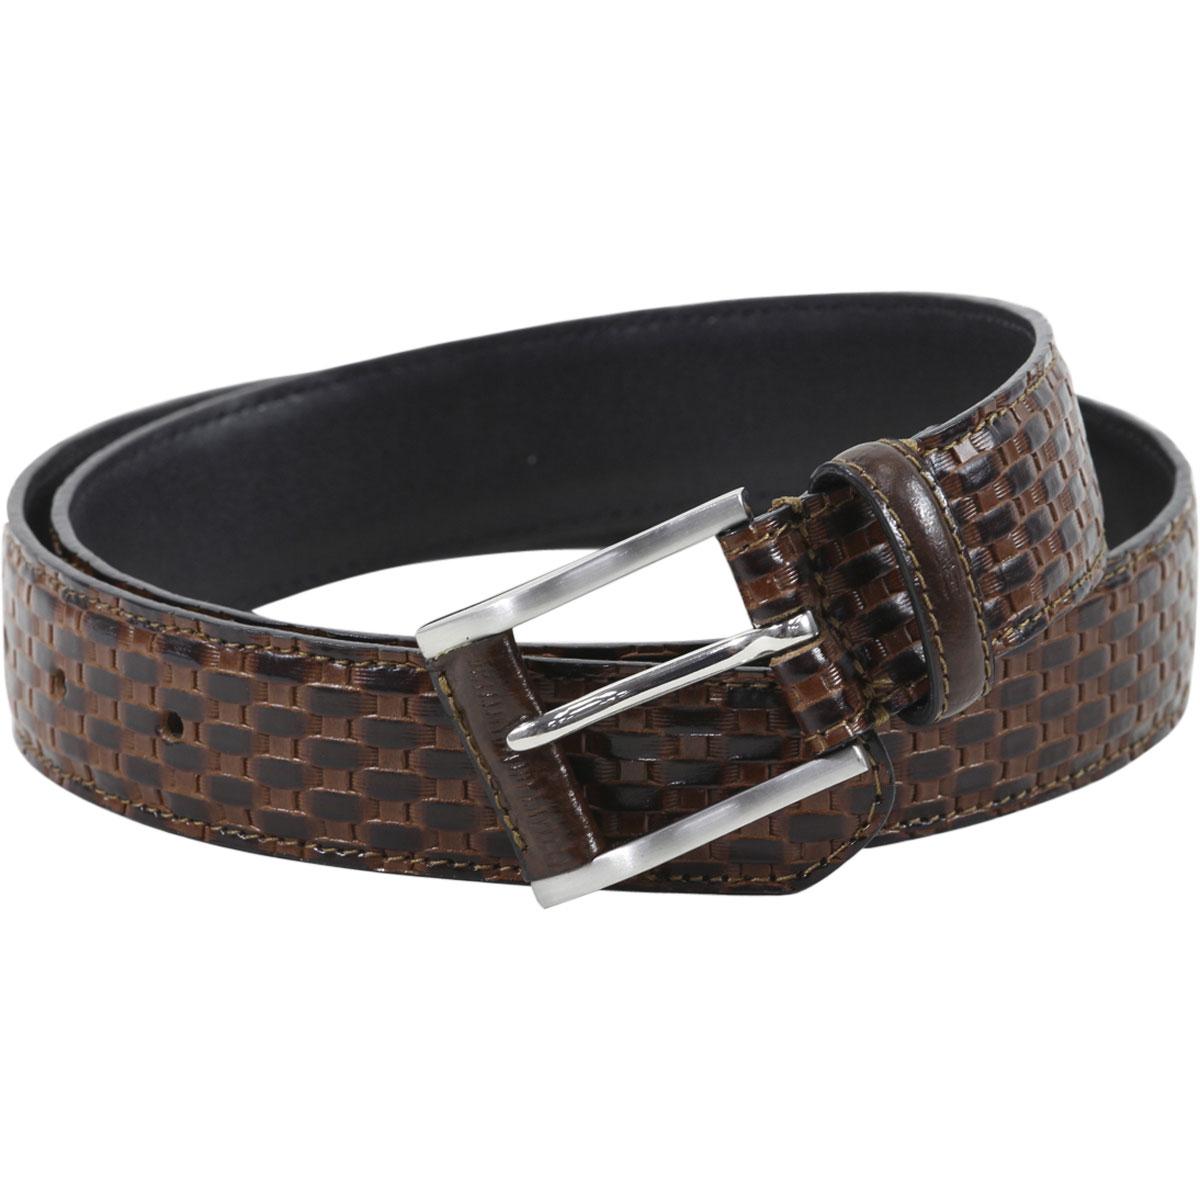 Stacy Adams Men's Basket Weave Embossed Genuine Leather Belt